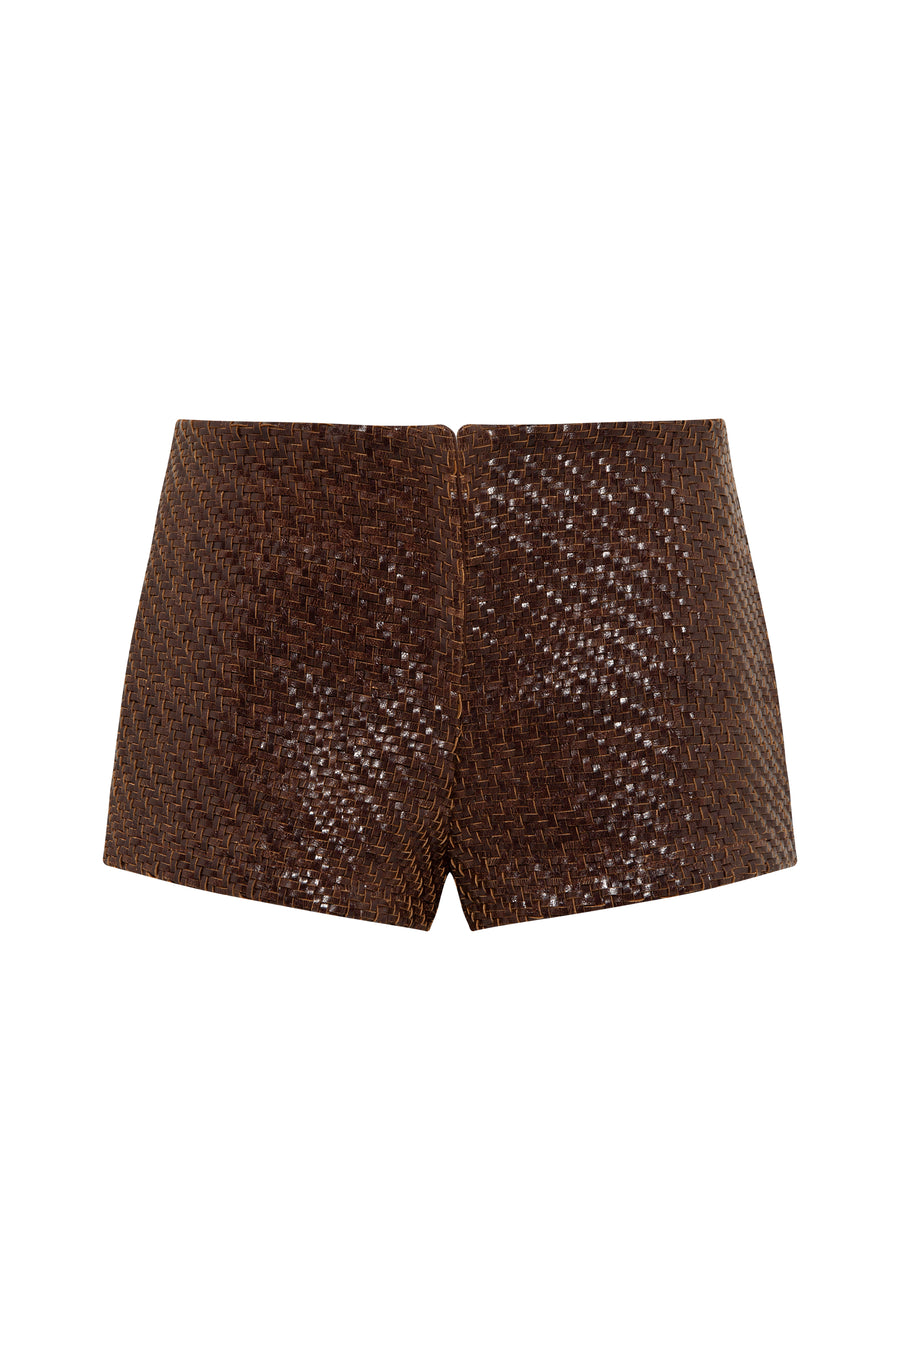 HUJI - Woven leather mini shorts